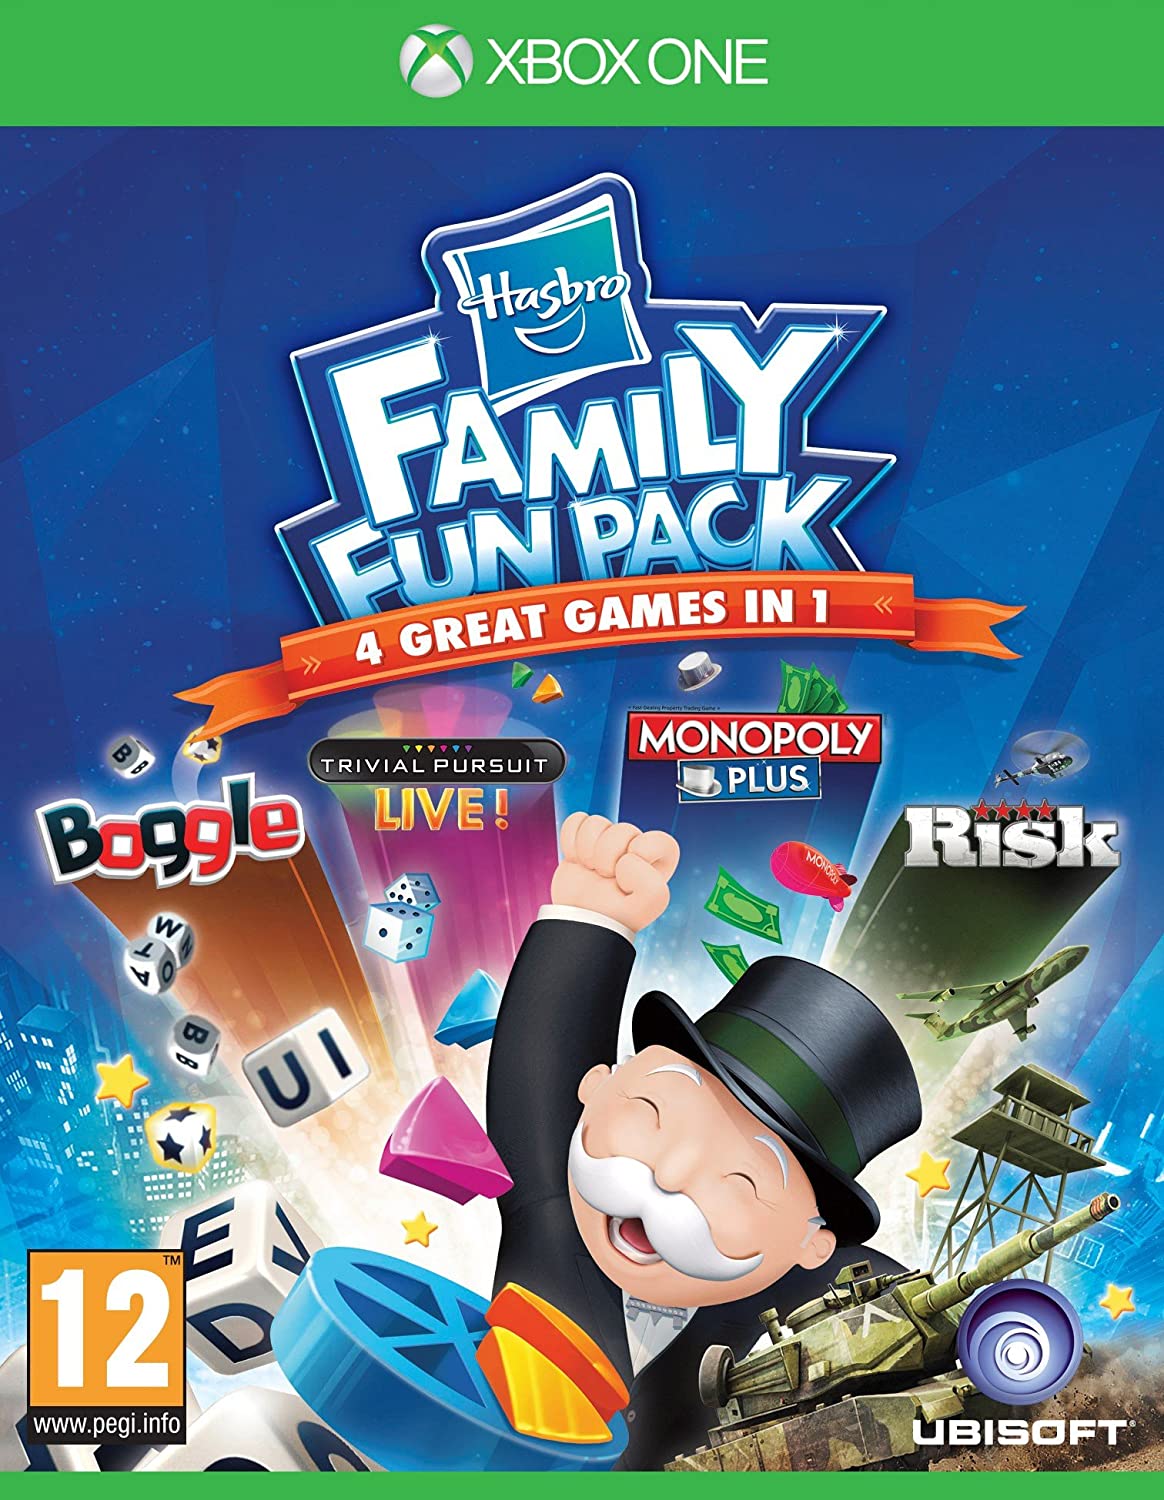 Hasbro Family Fun Pack Digital Download Key (Xbox One): USA